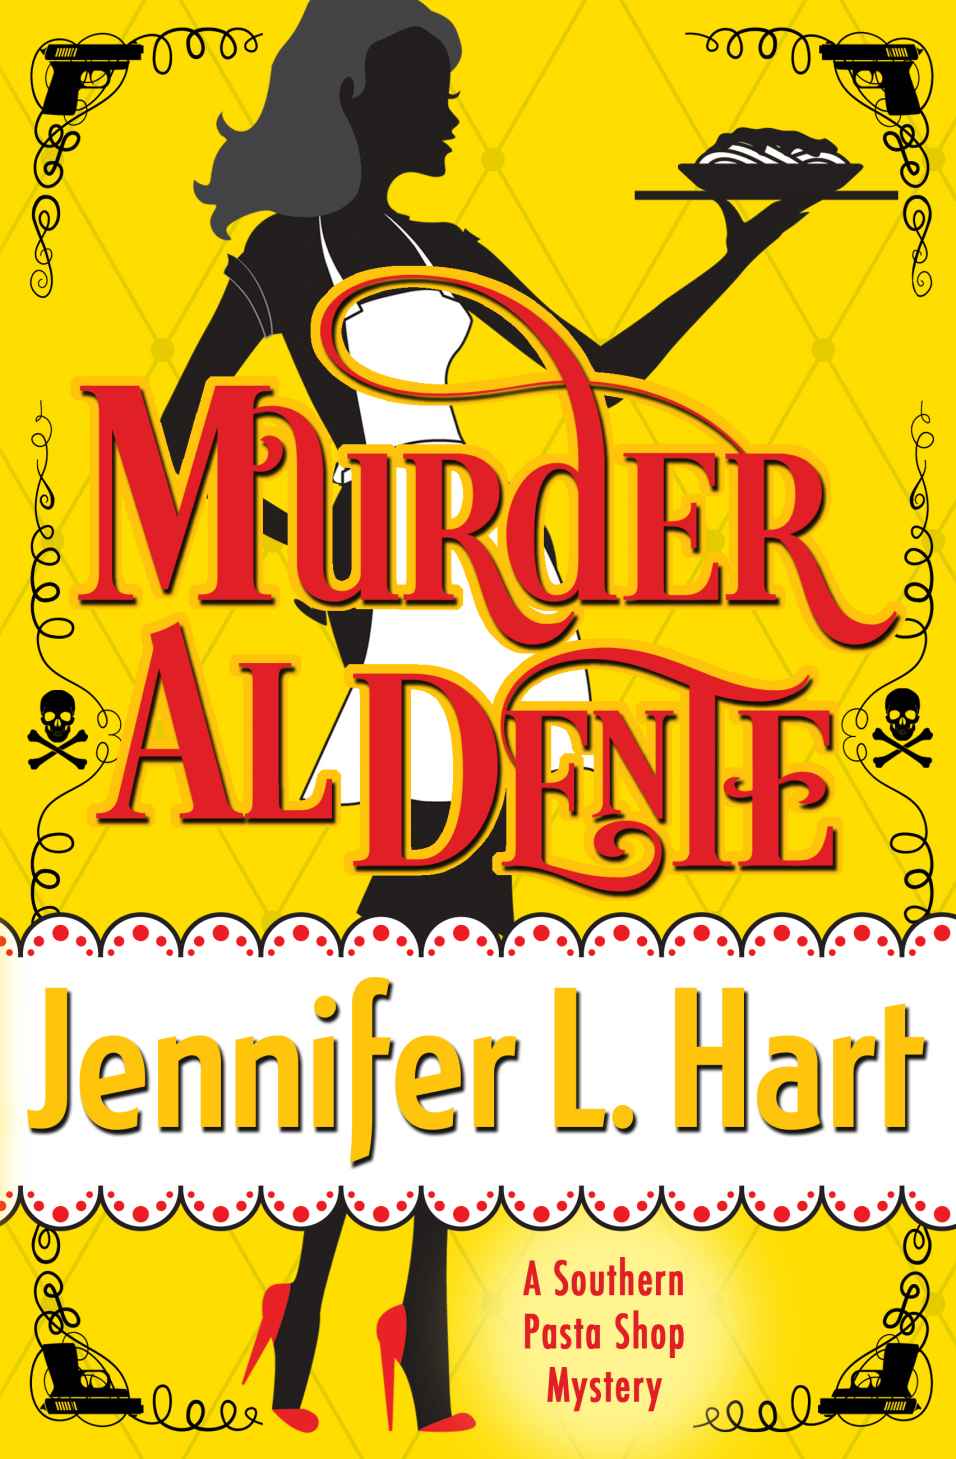 Murder Al Dente: A Southern Pasta Shop Mystery (Southern Pasta Shop Mysteries Book 1) by Jennifer L. Hart